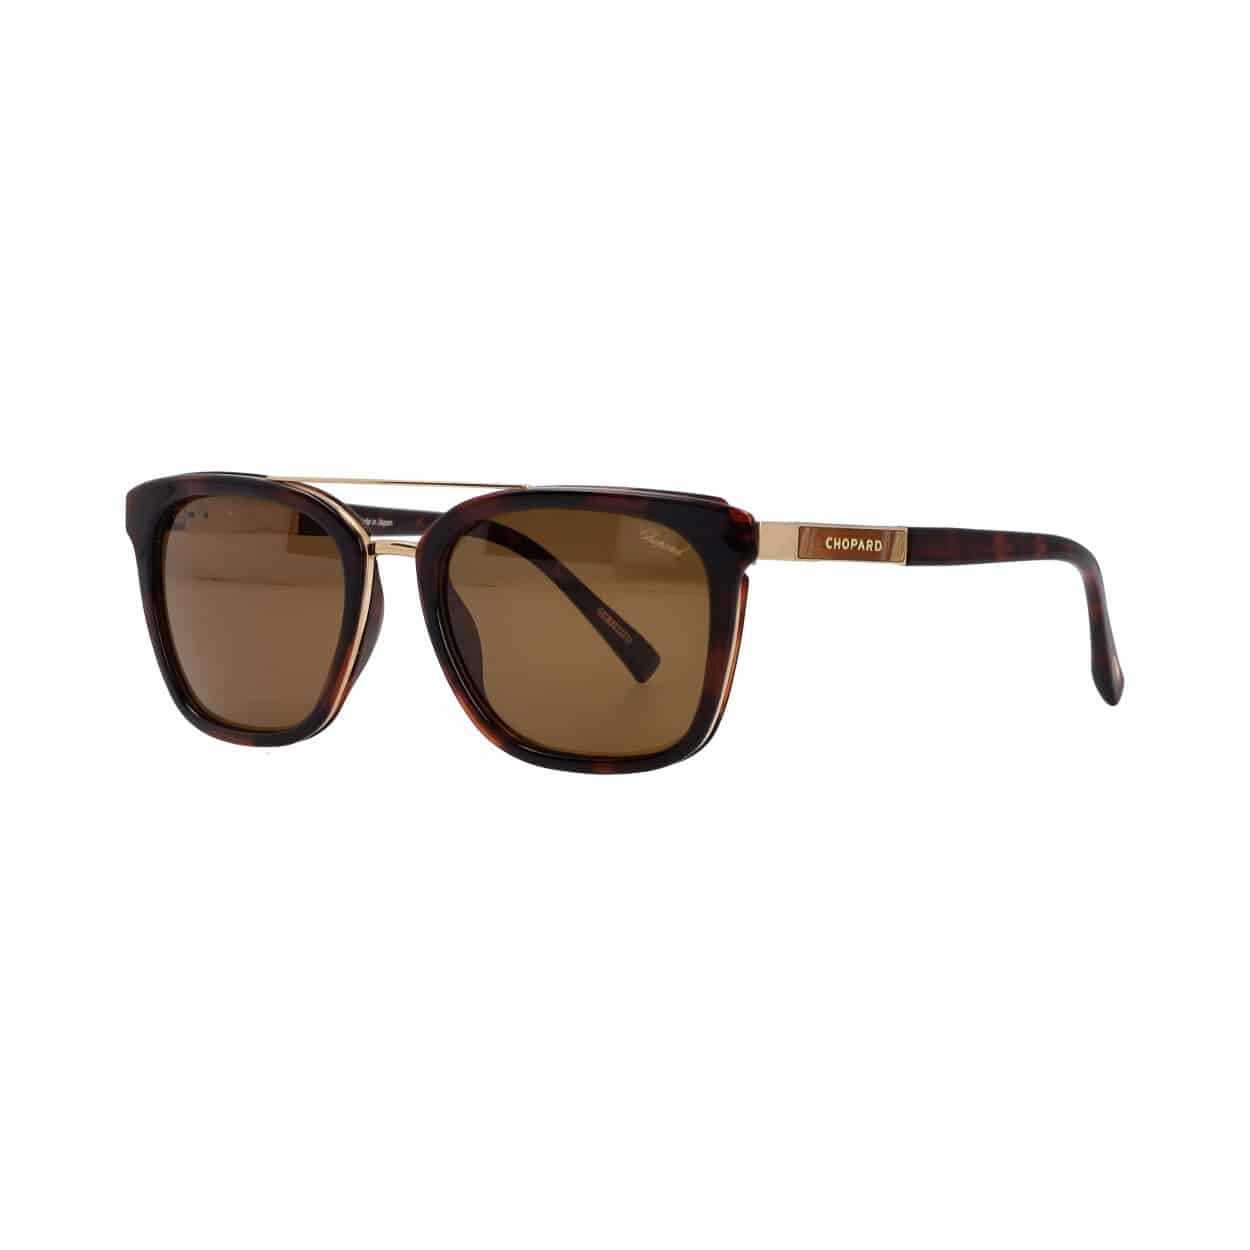 CHOPARD Polarized Sunglasses SCH 04 Tortoise | Luxity